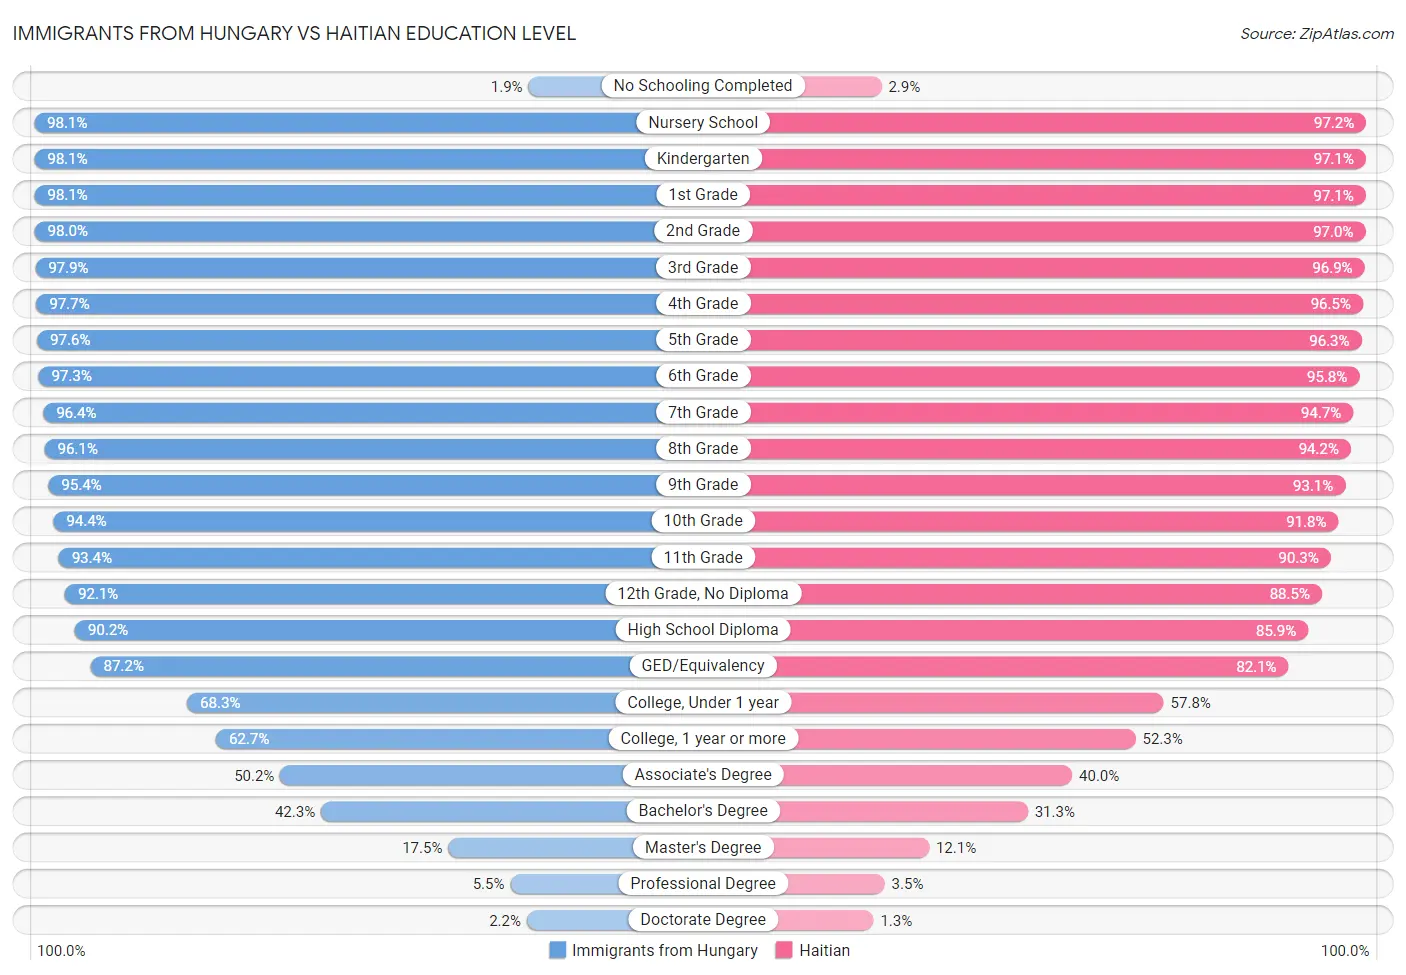 Immigrants from Hungary vs Haitian Education Level